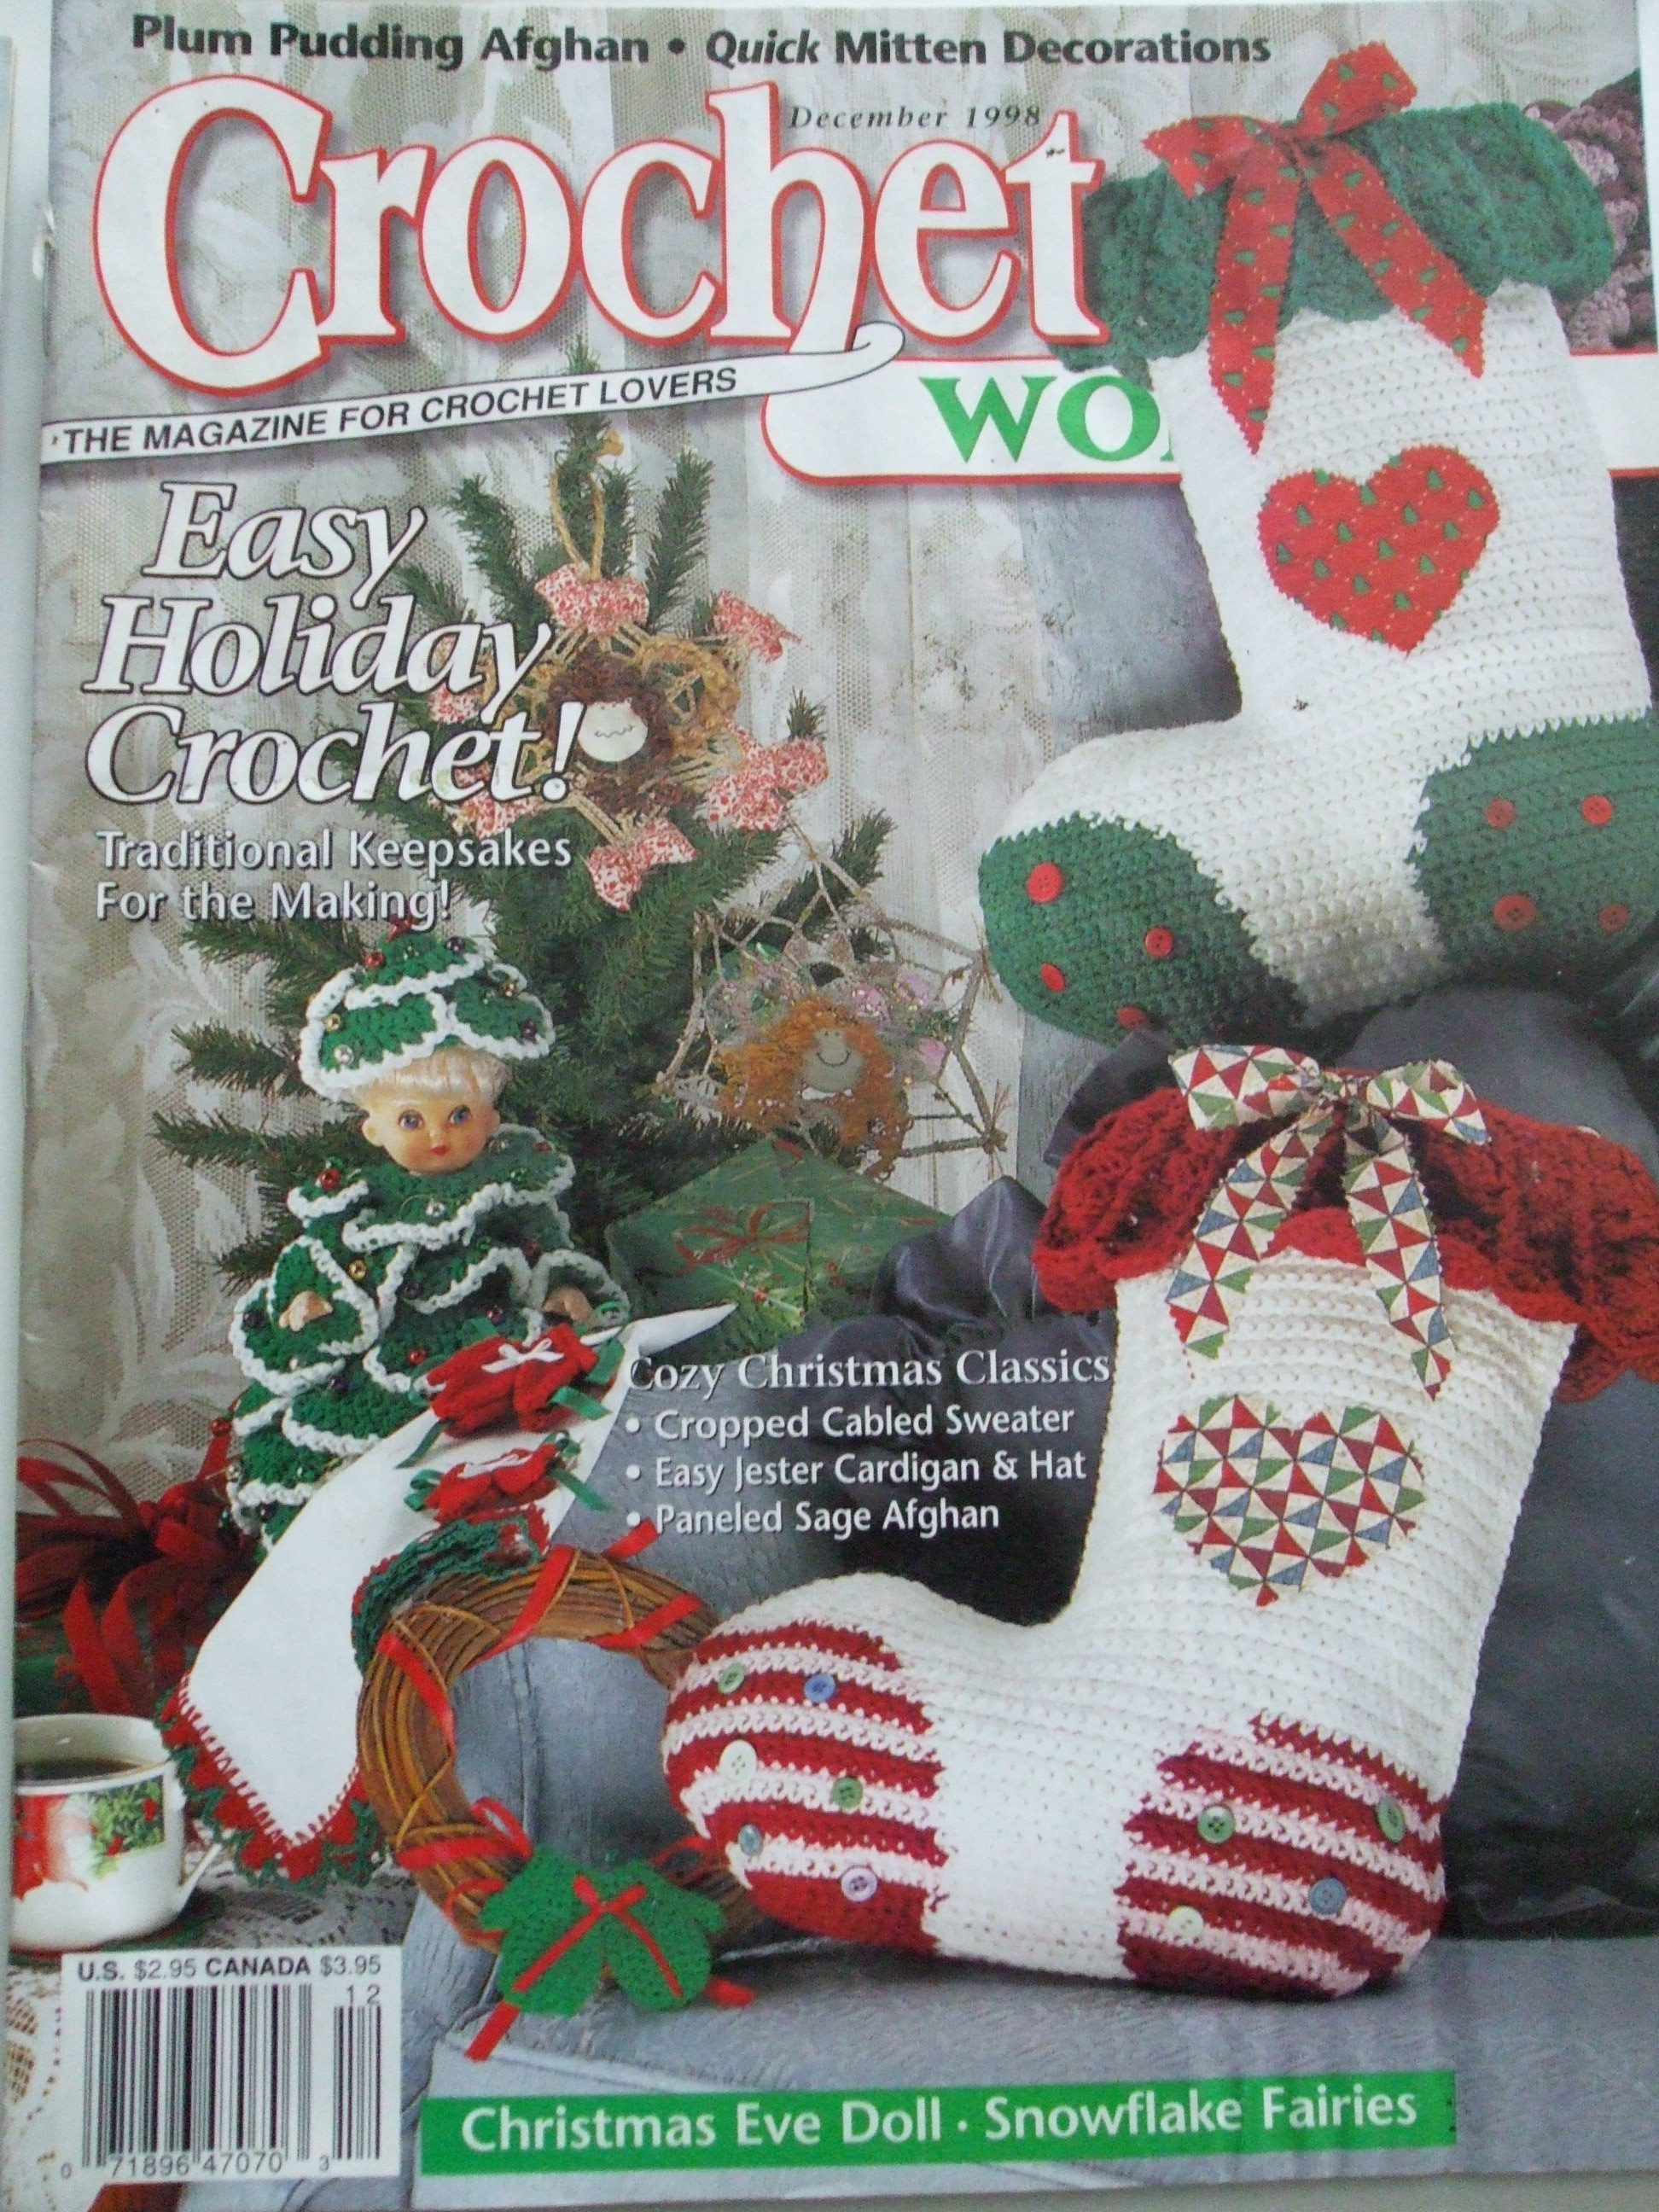 Crochet World Patterns Crochet World Magazines Patterns 1981 1995 1998 1999 2013 Prices